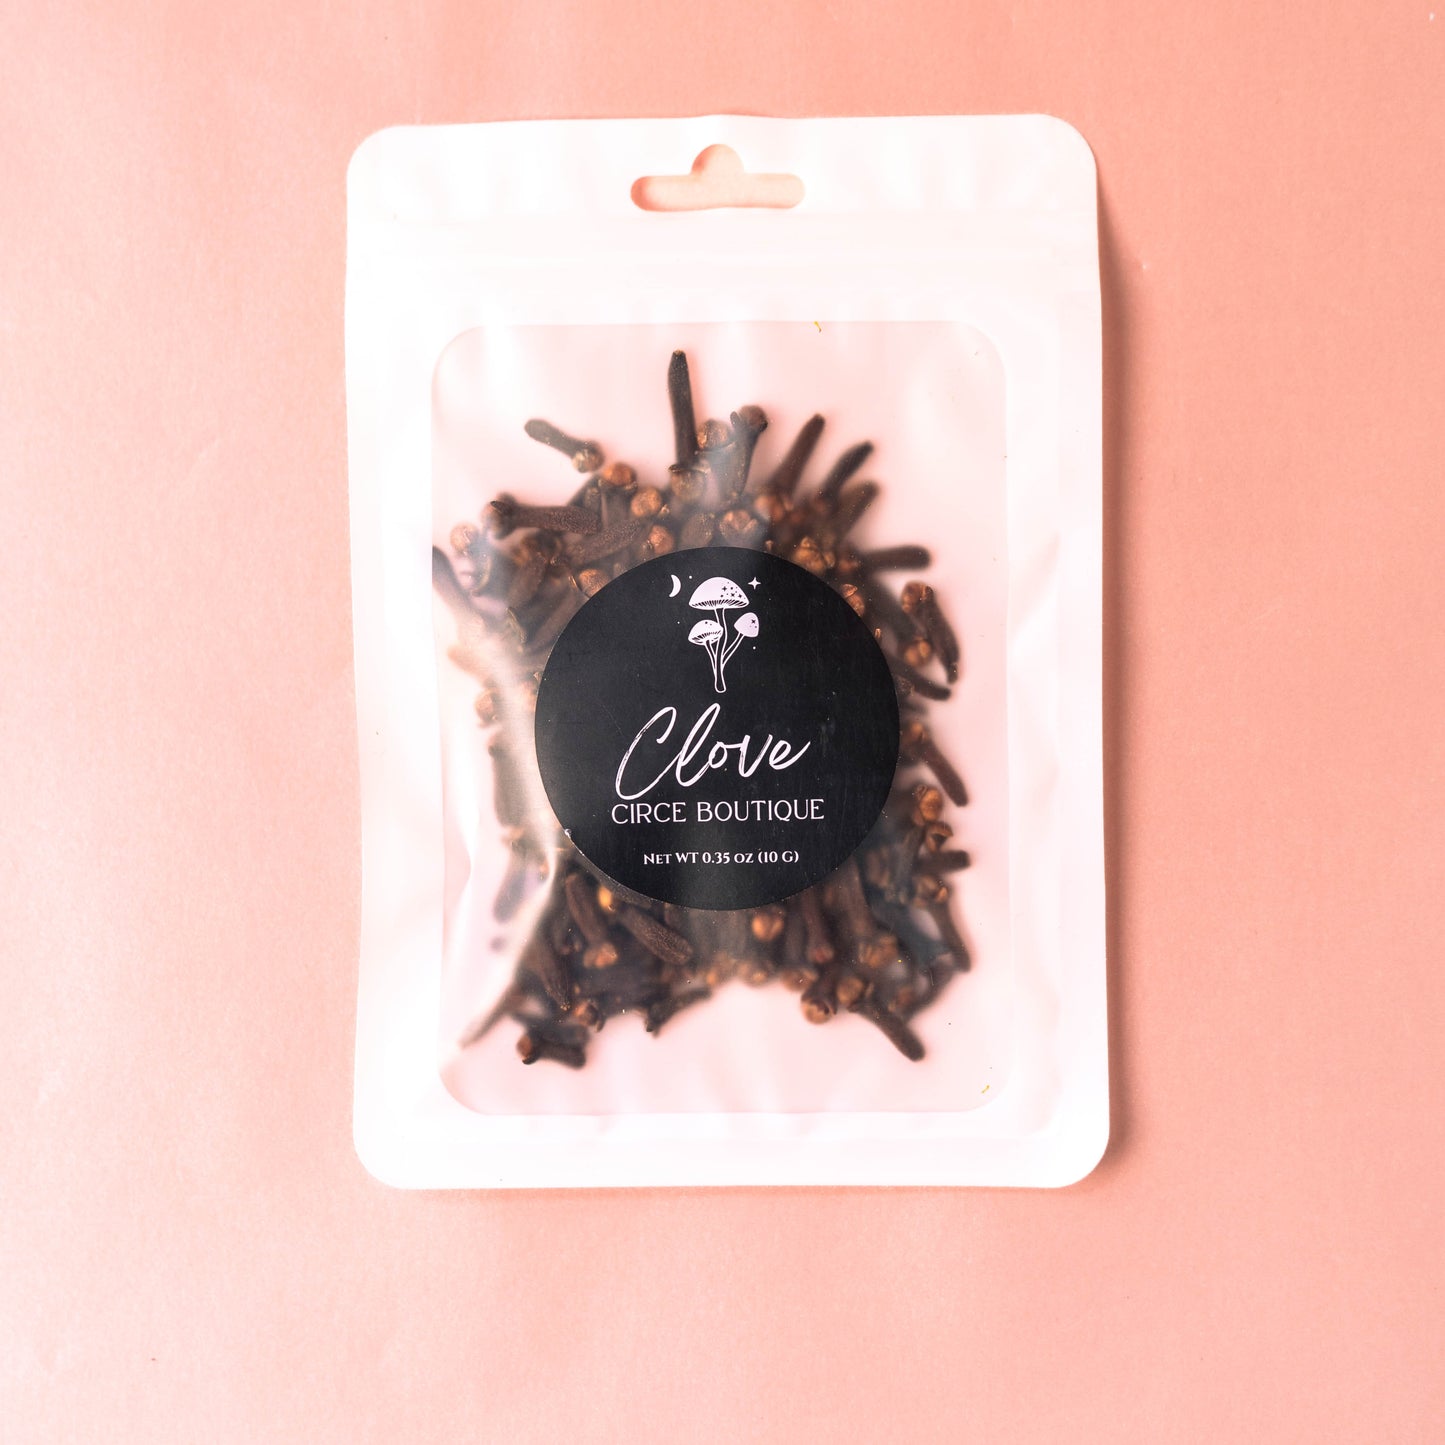 CIRCE Clove .35 oz. - Herbs  from CirceBoutique